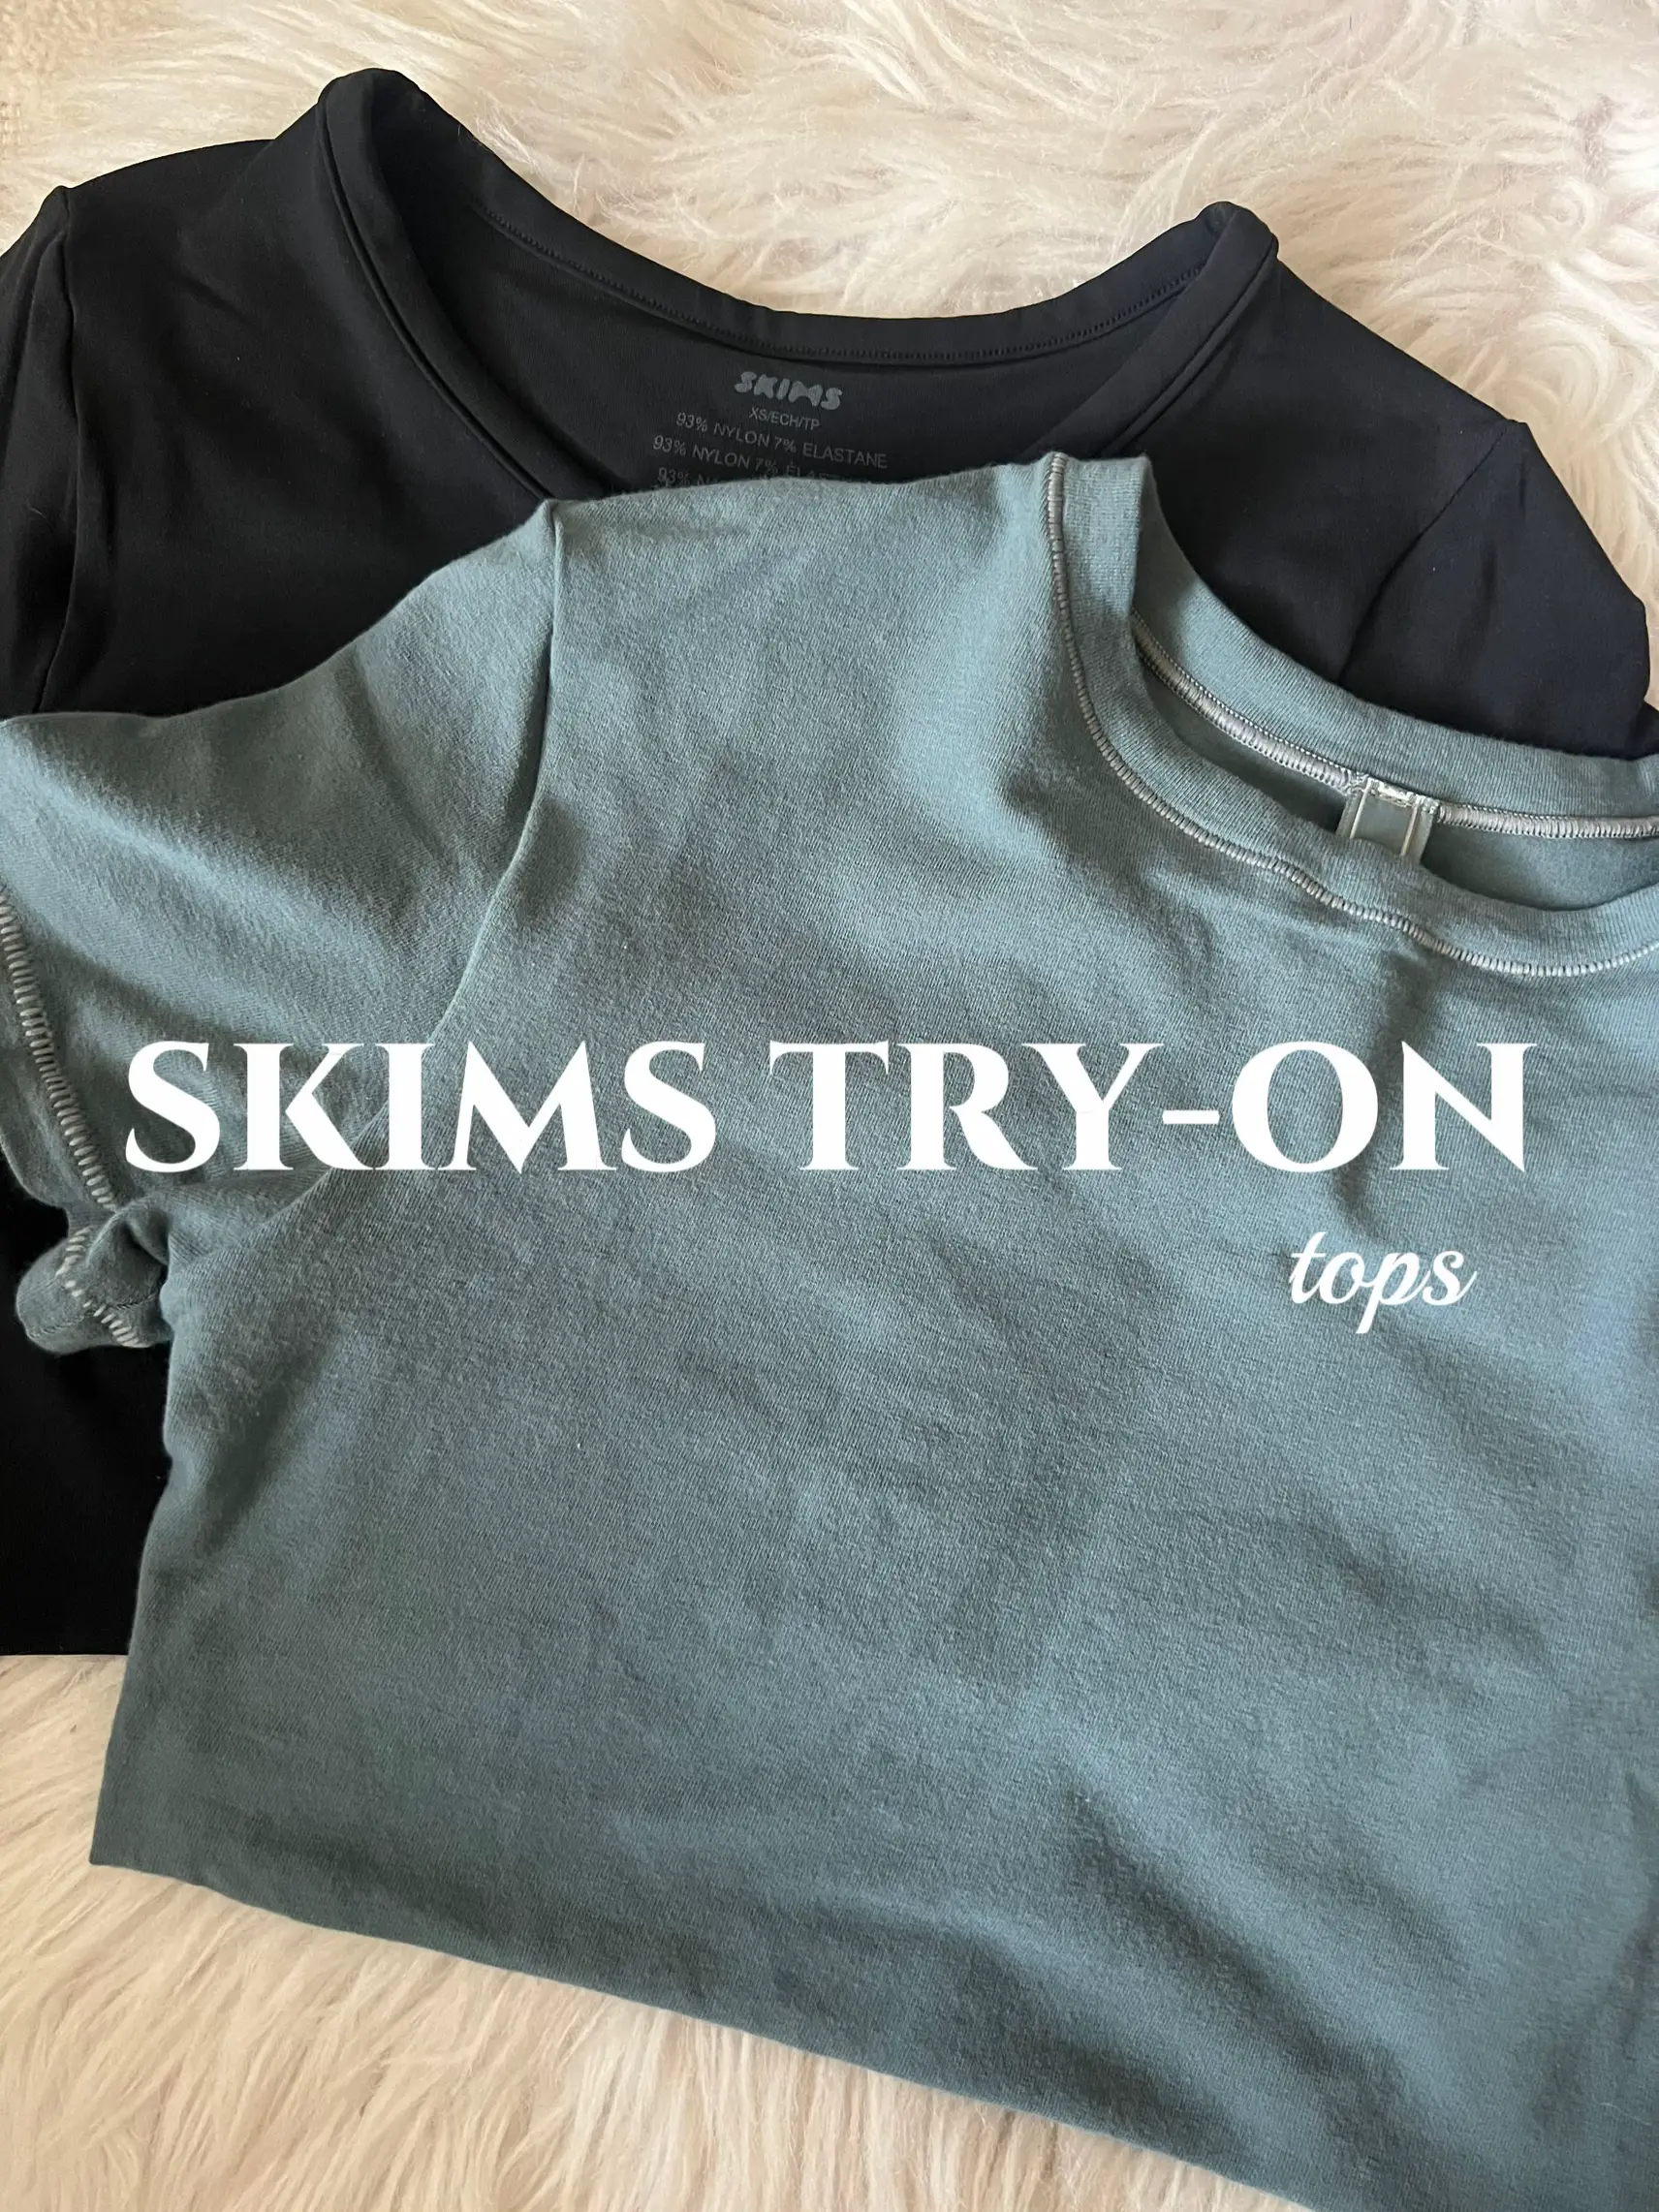 SKIMS TRY-ON : Tops, Gallery posted by Chloe Kapisak